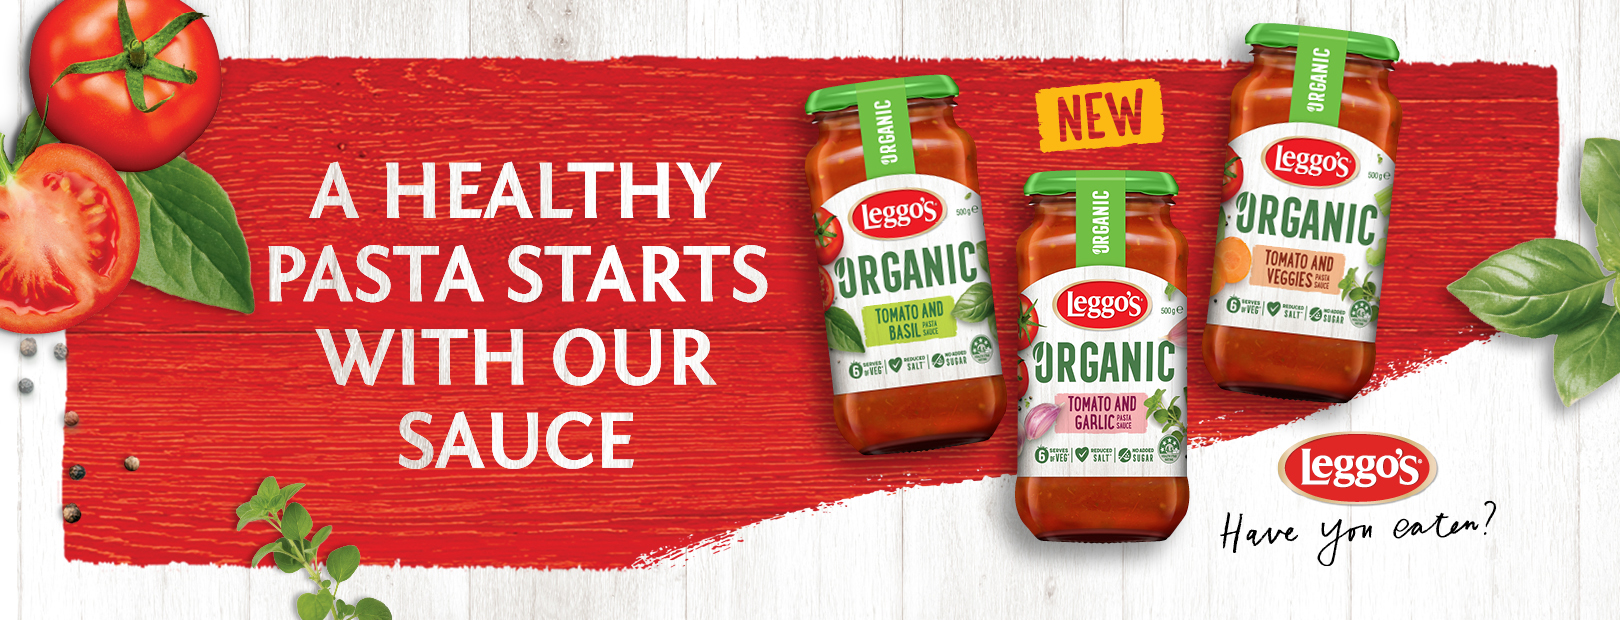 Organic Leggo's Sauce Banner Image